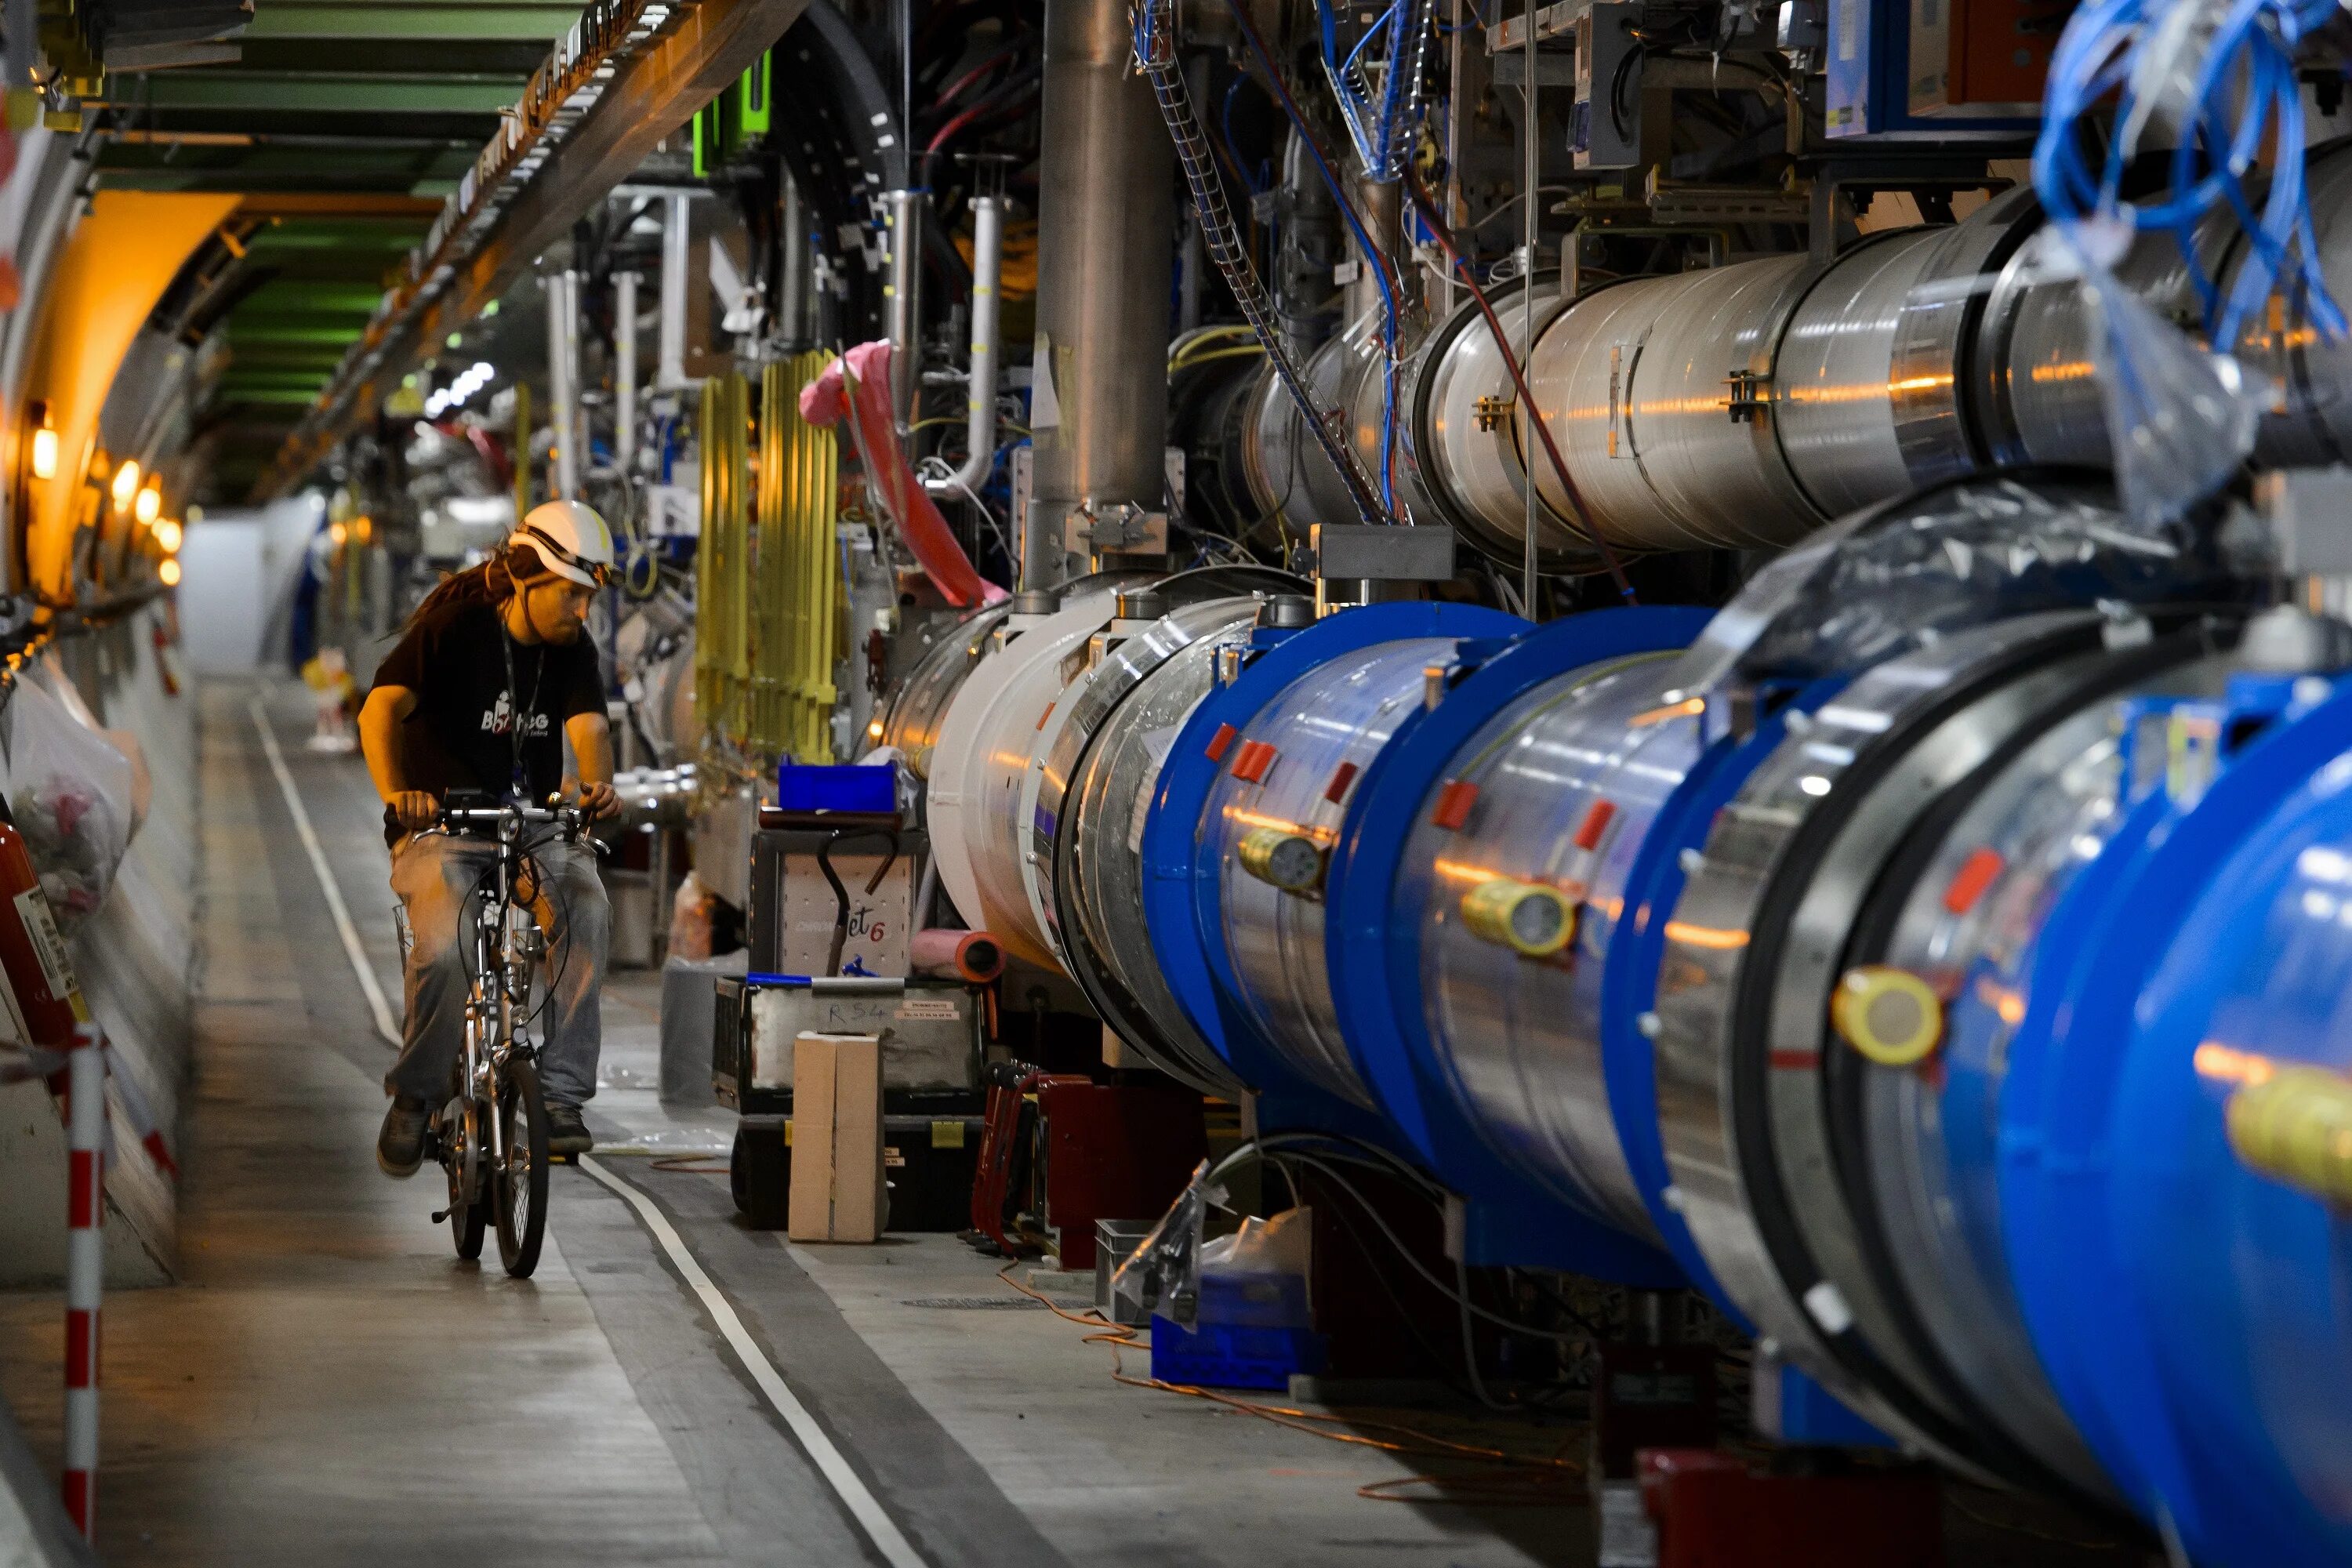 Церн швейцария. Большой адронный коллайдер ЦЕРН. Швейцария ЦЕРН коллайдер. Адронный коллайдер в Женеве. Европейской организацией ядерных исследований (ЦЕРН).